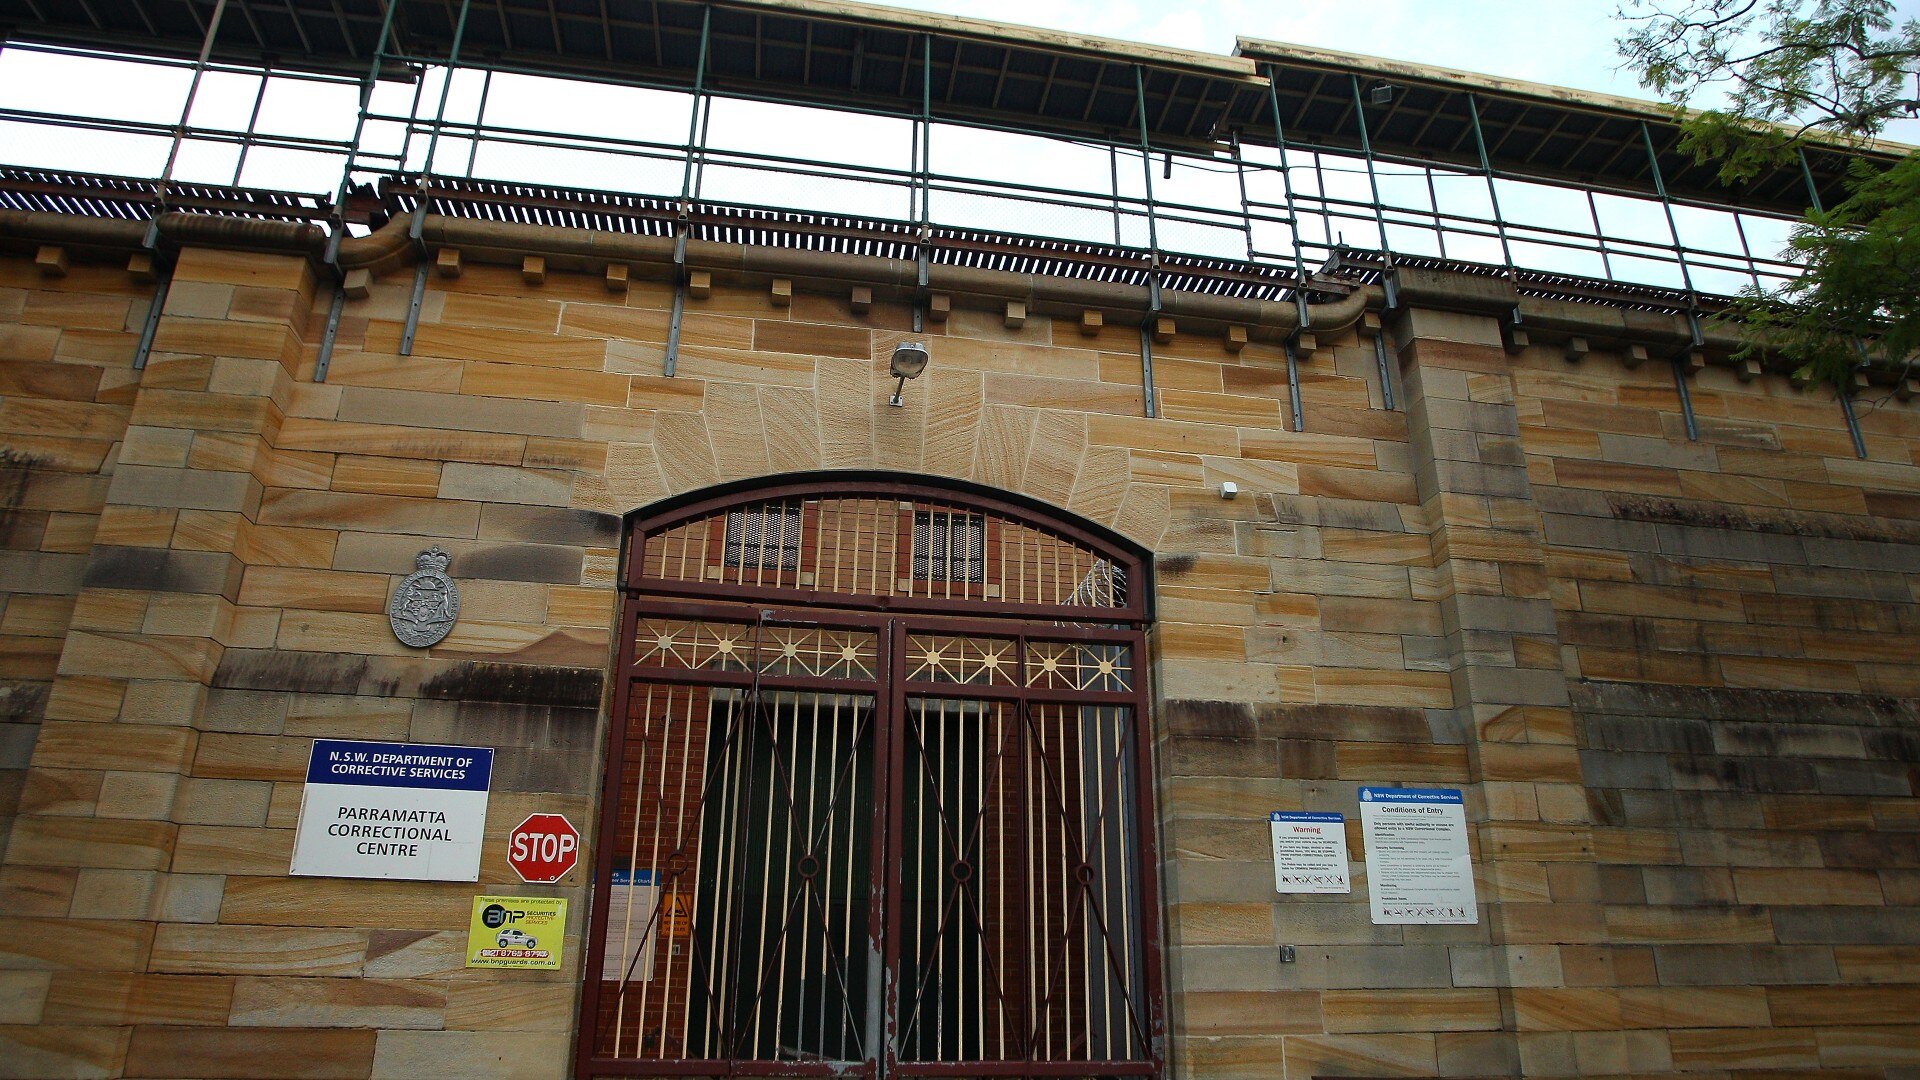 Parramatta Correctional Centre, former medium security prison